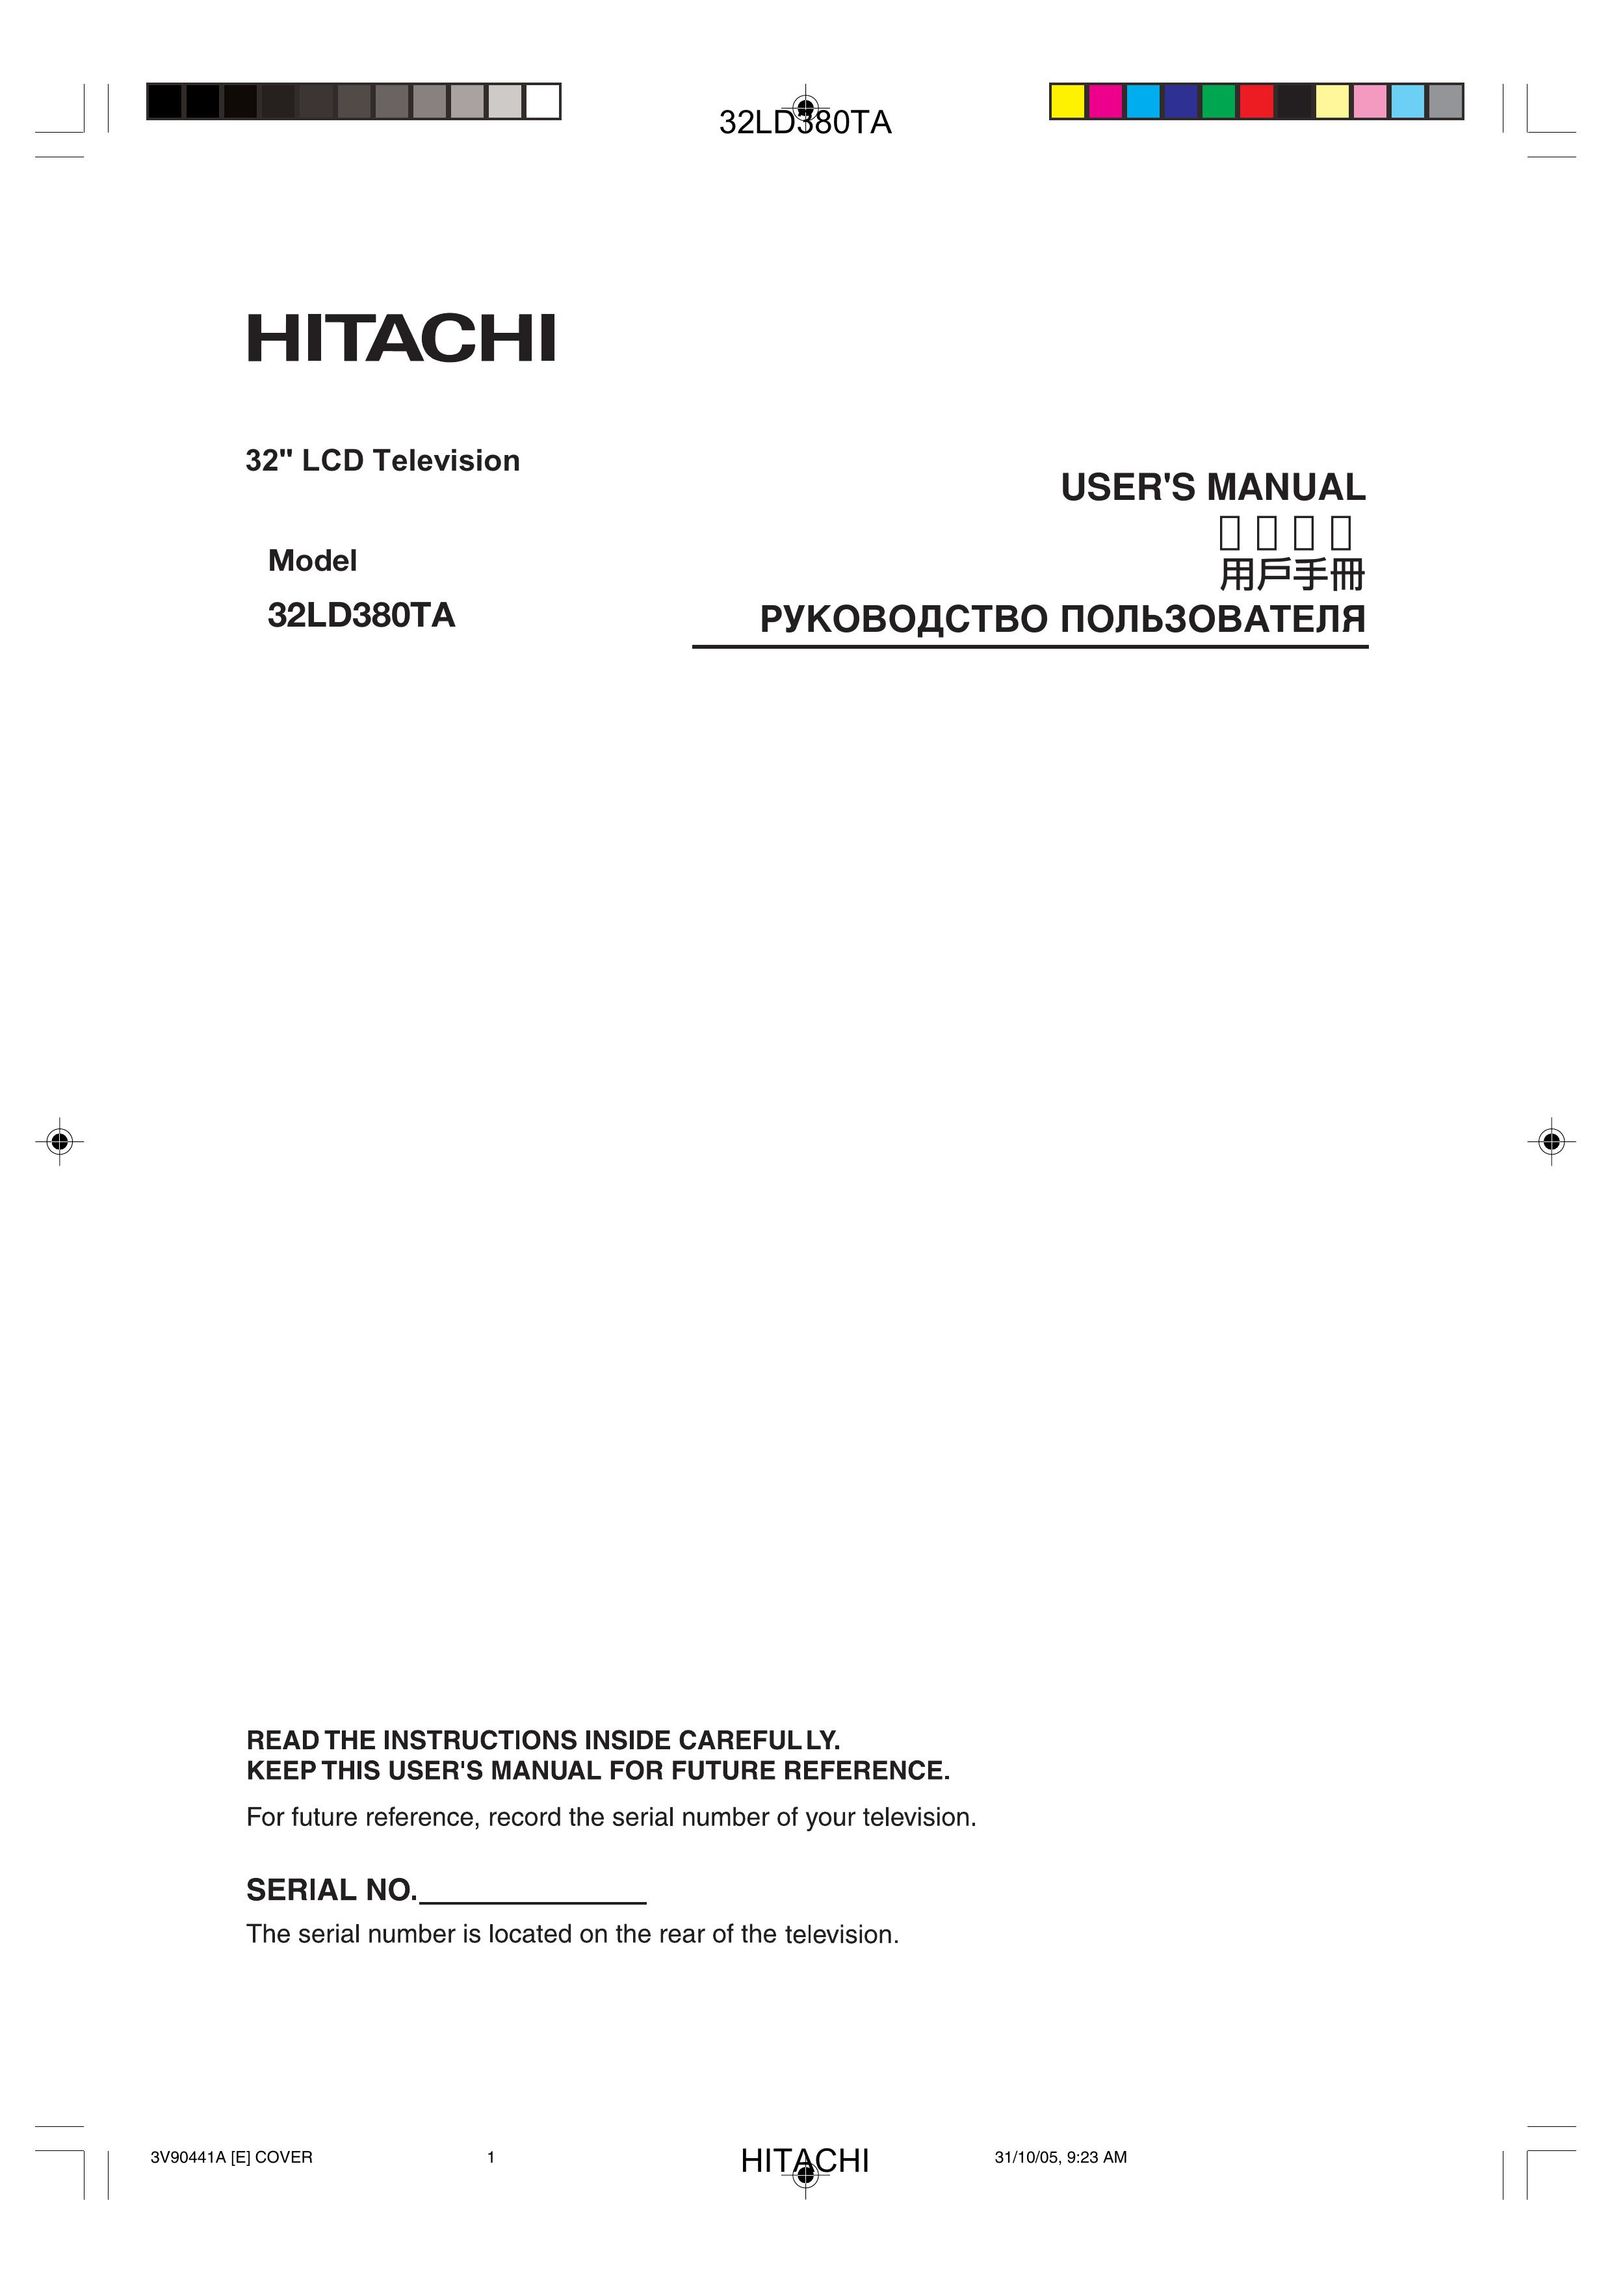 Hitachi 32LD380TA Flat Panel Television User Manual